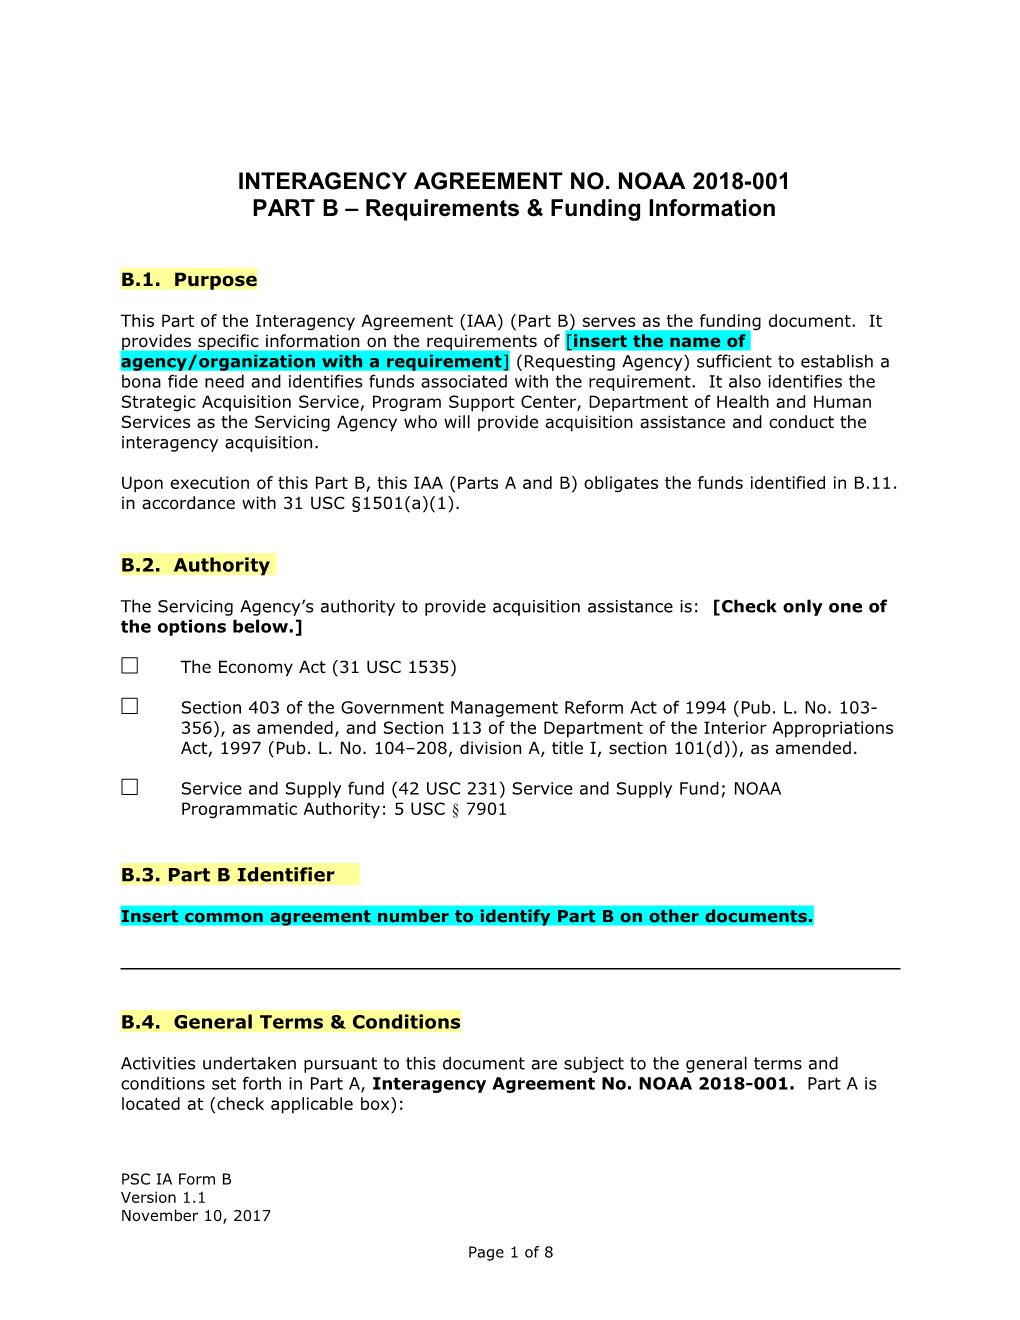 Model Interagency Agreement